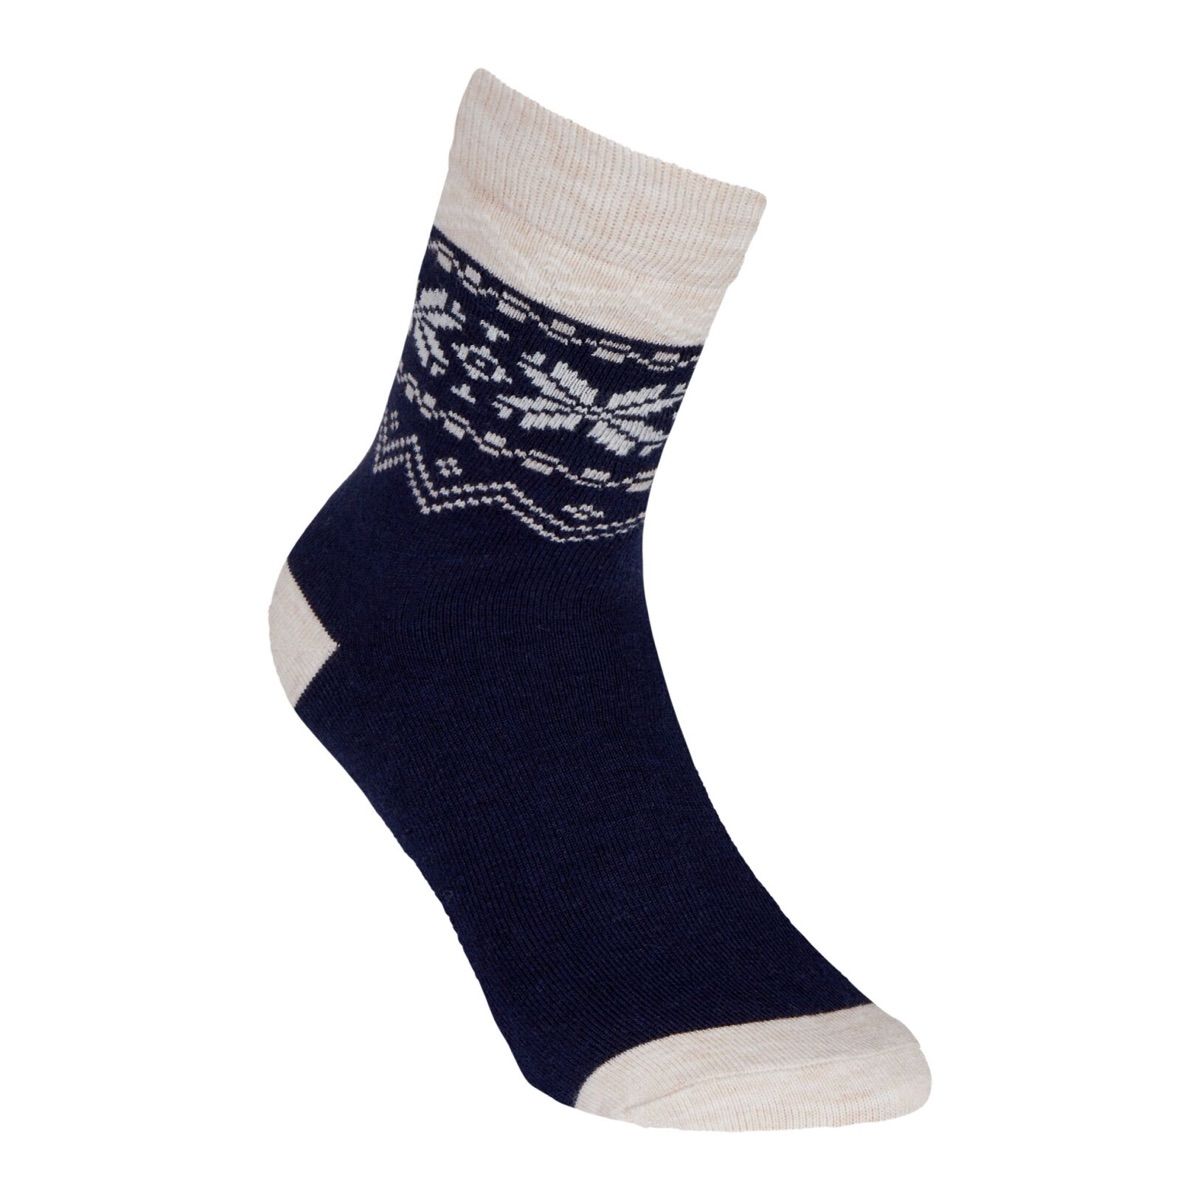 Gridarmor Heritage Merino Socks Navy Blazer